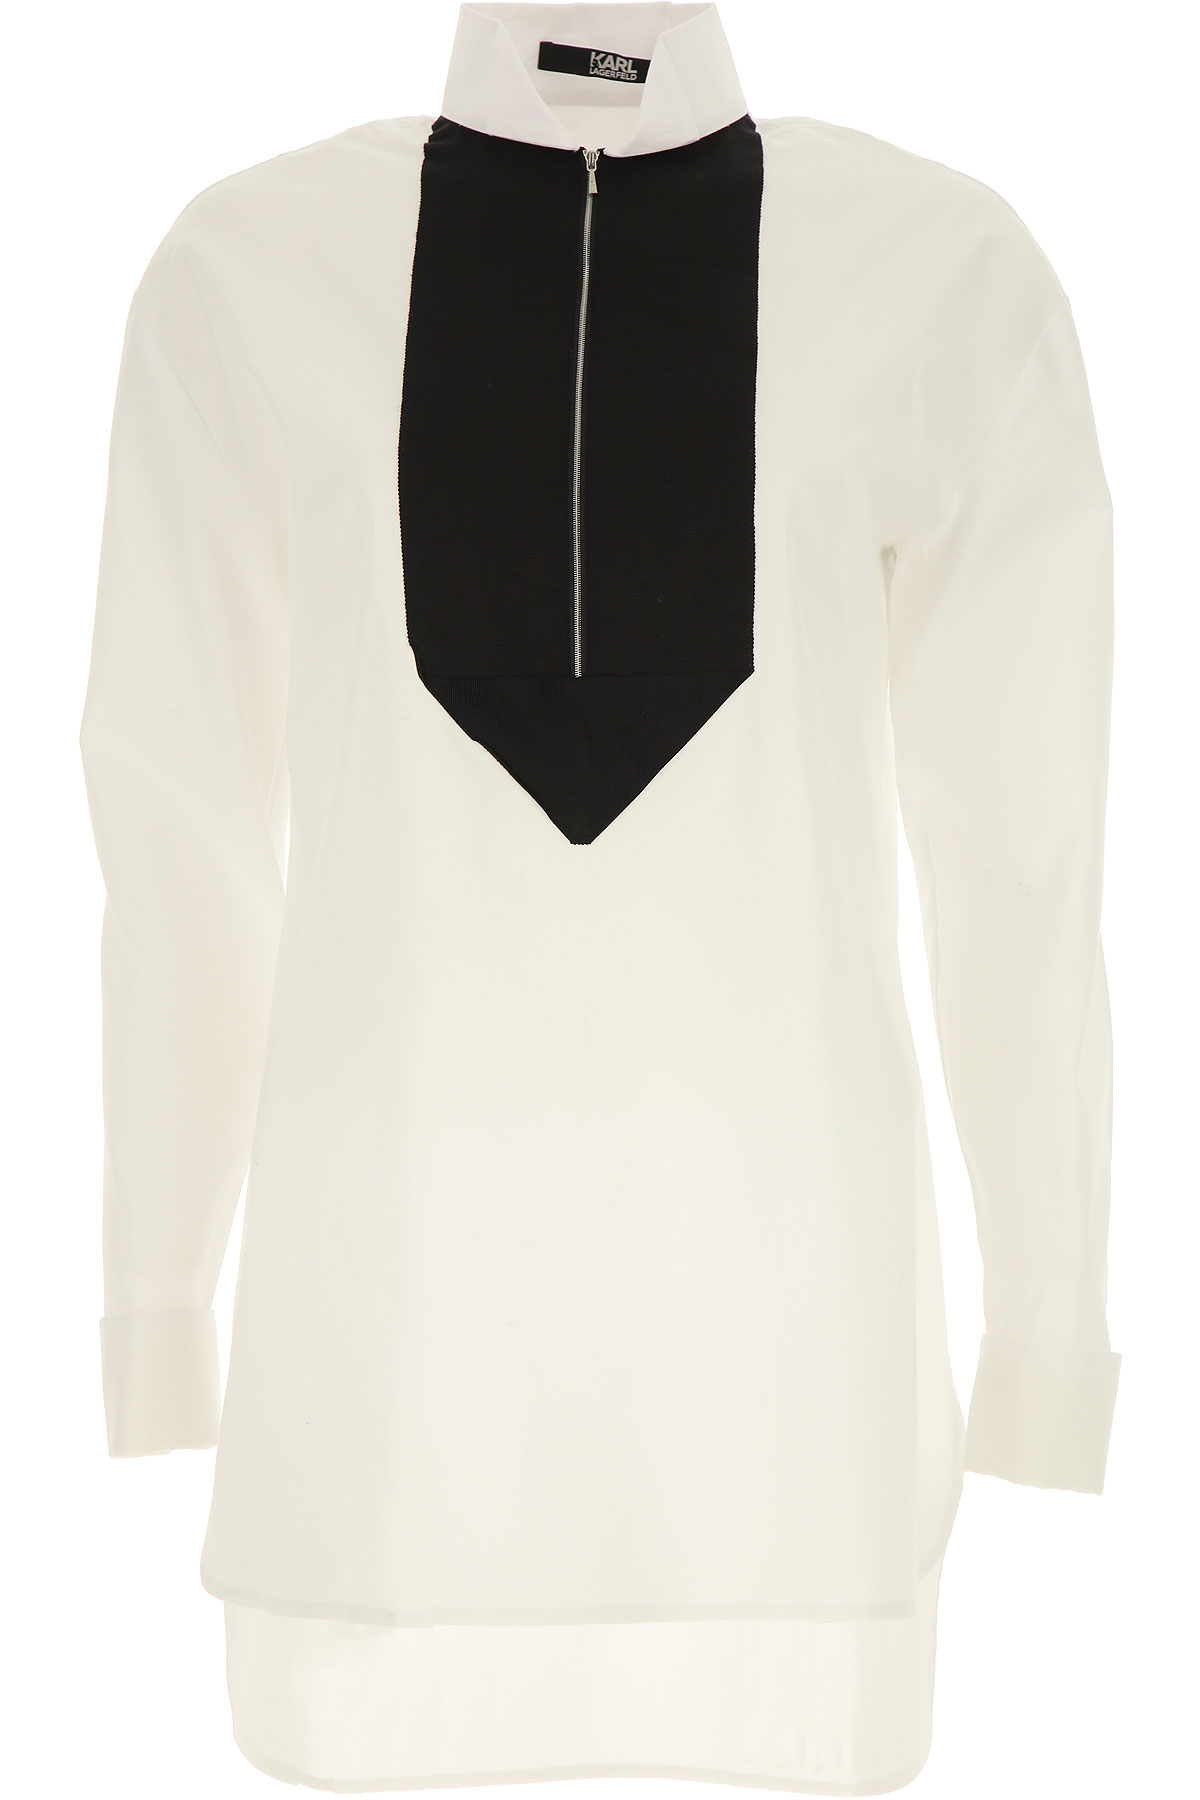 Karl Lagerfeld Chemise Femme, Blanc, Coton, 2017, 40 42 44 46